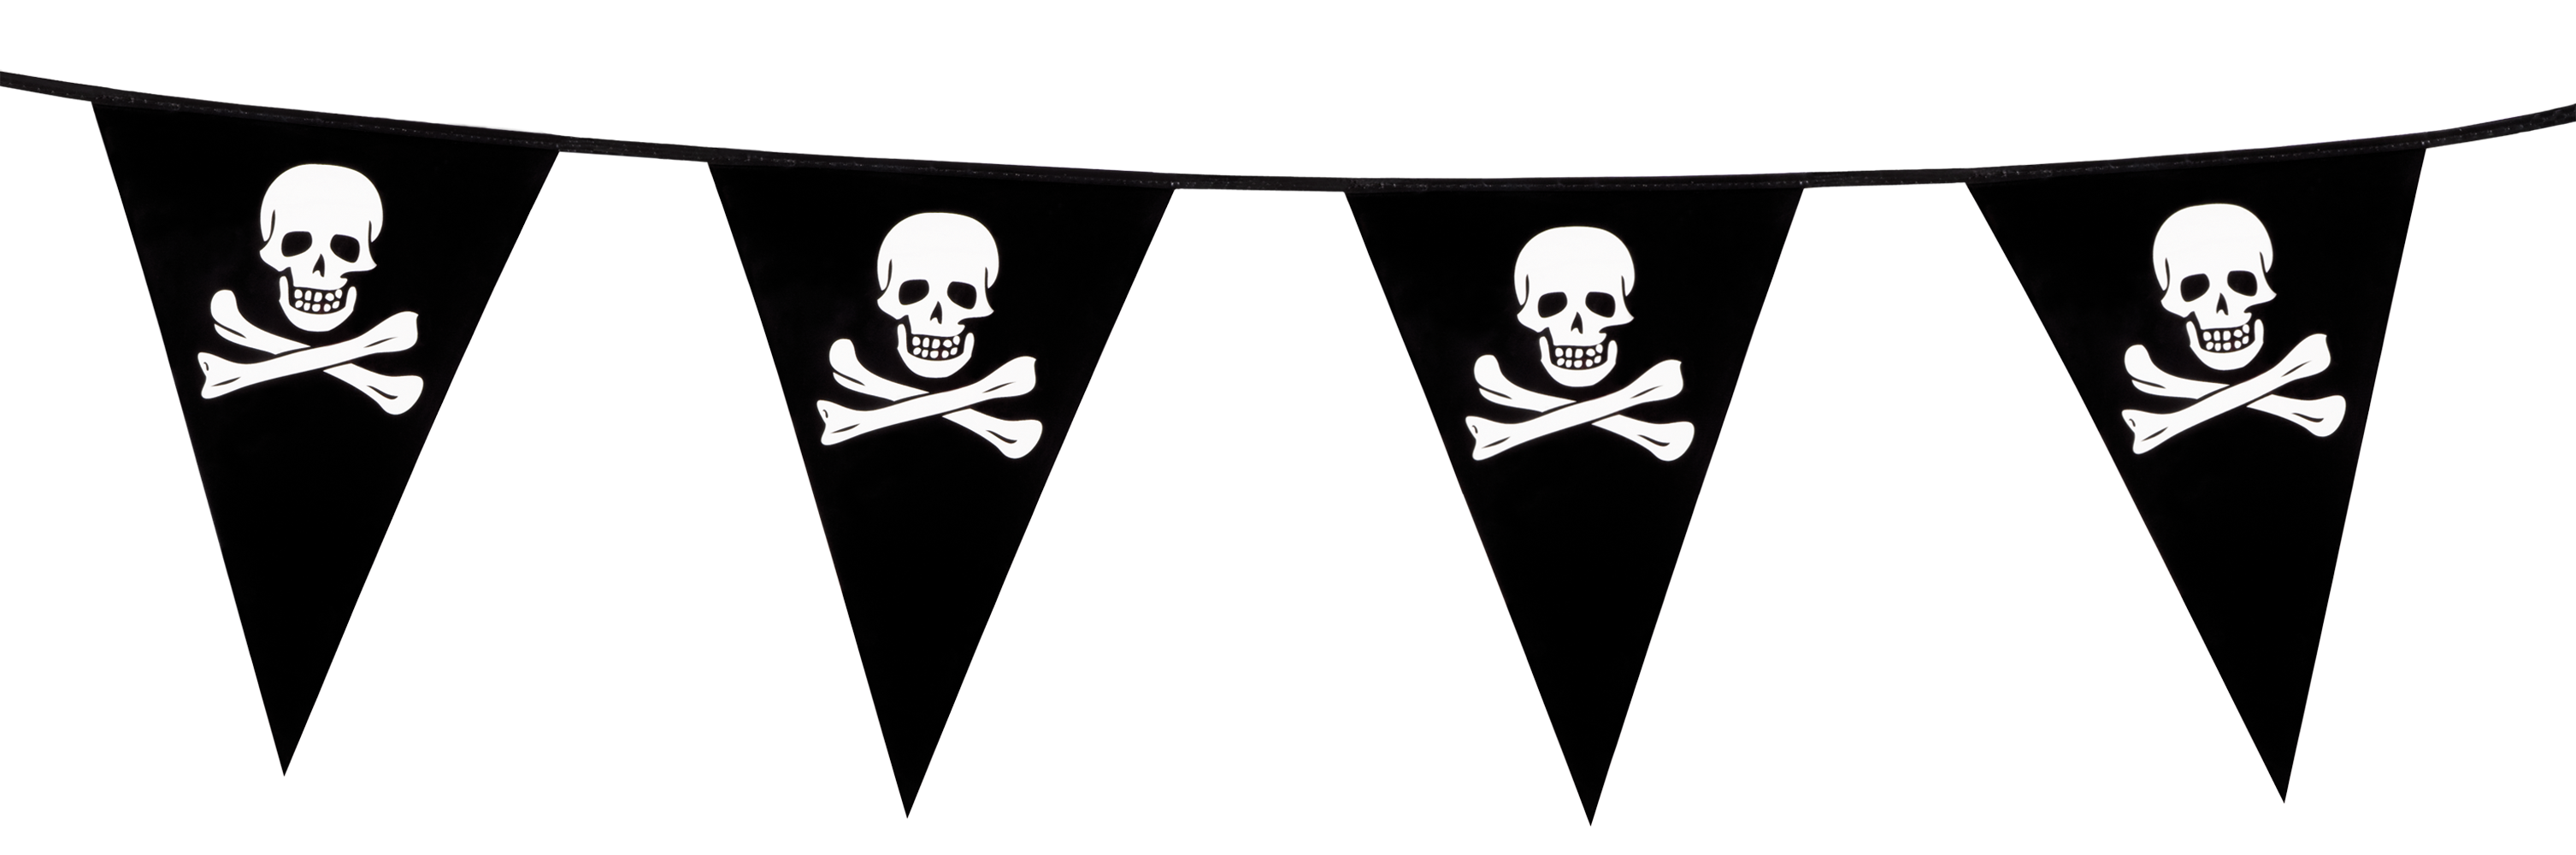 Знамени 6 букв. Пиратские флажки для гирлянды. Пиратские треугольные флажки. Флажки гирлянды для пиратской вечеринки. Гирлянда из флажков Пиратская вечеринка.